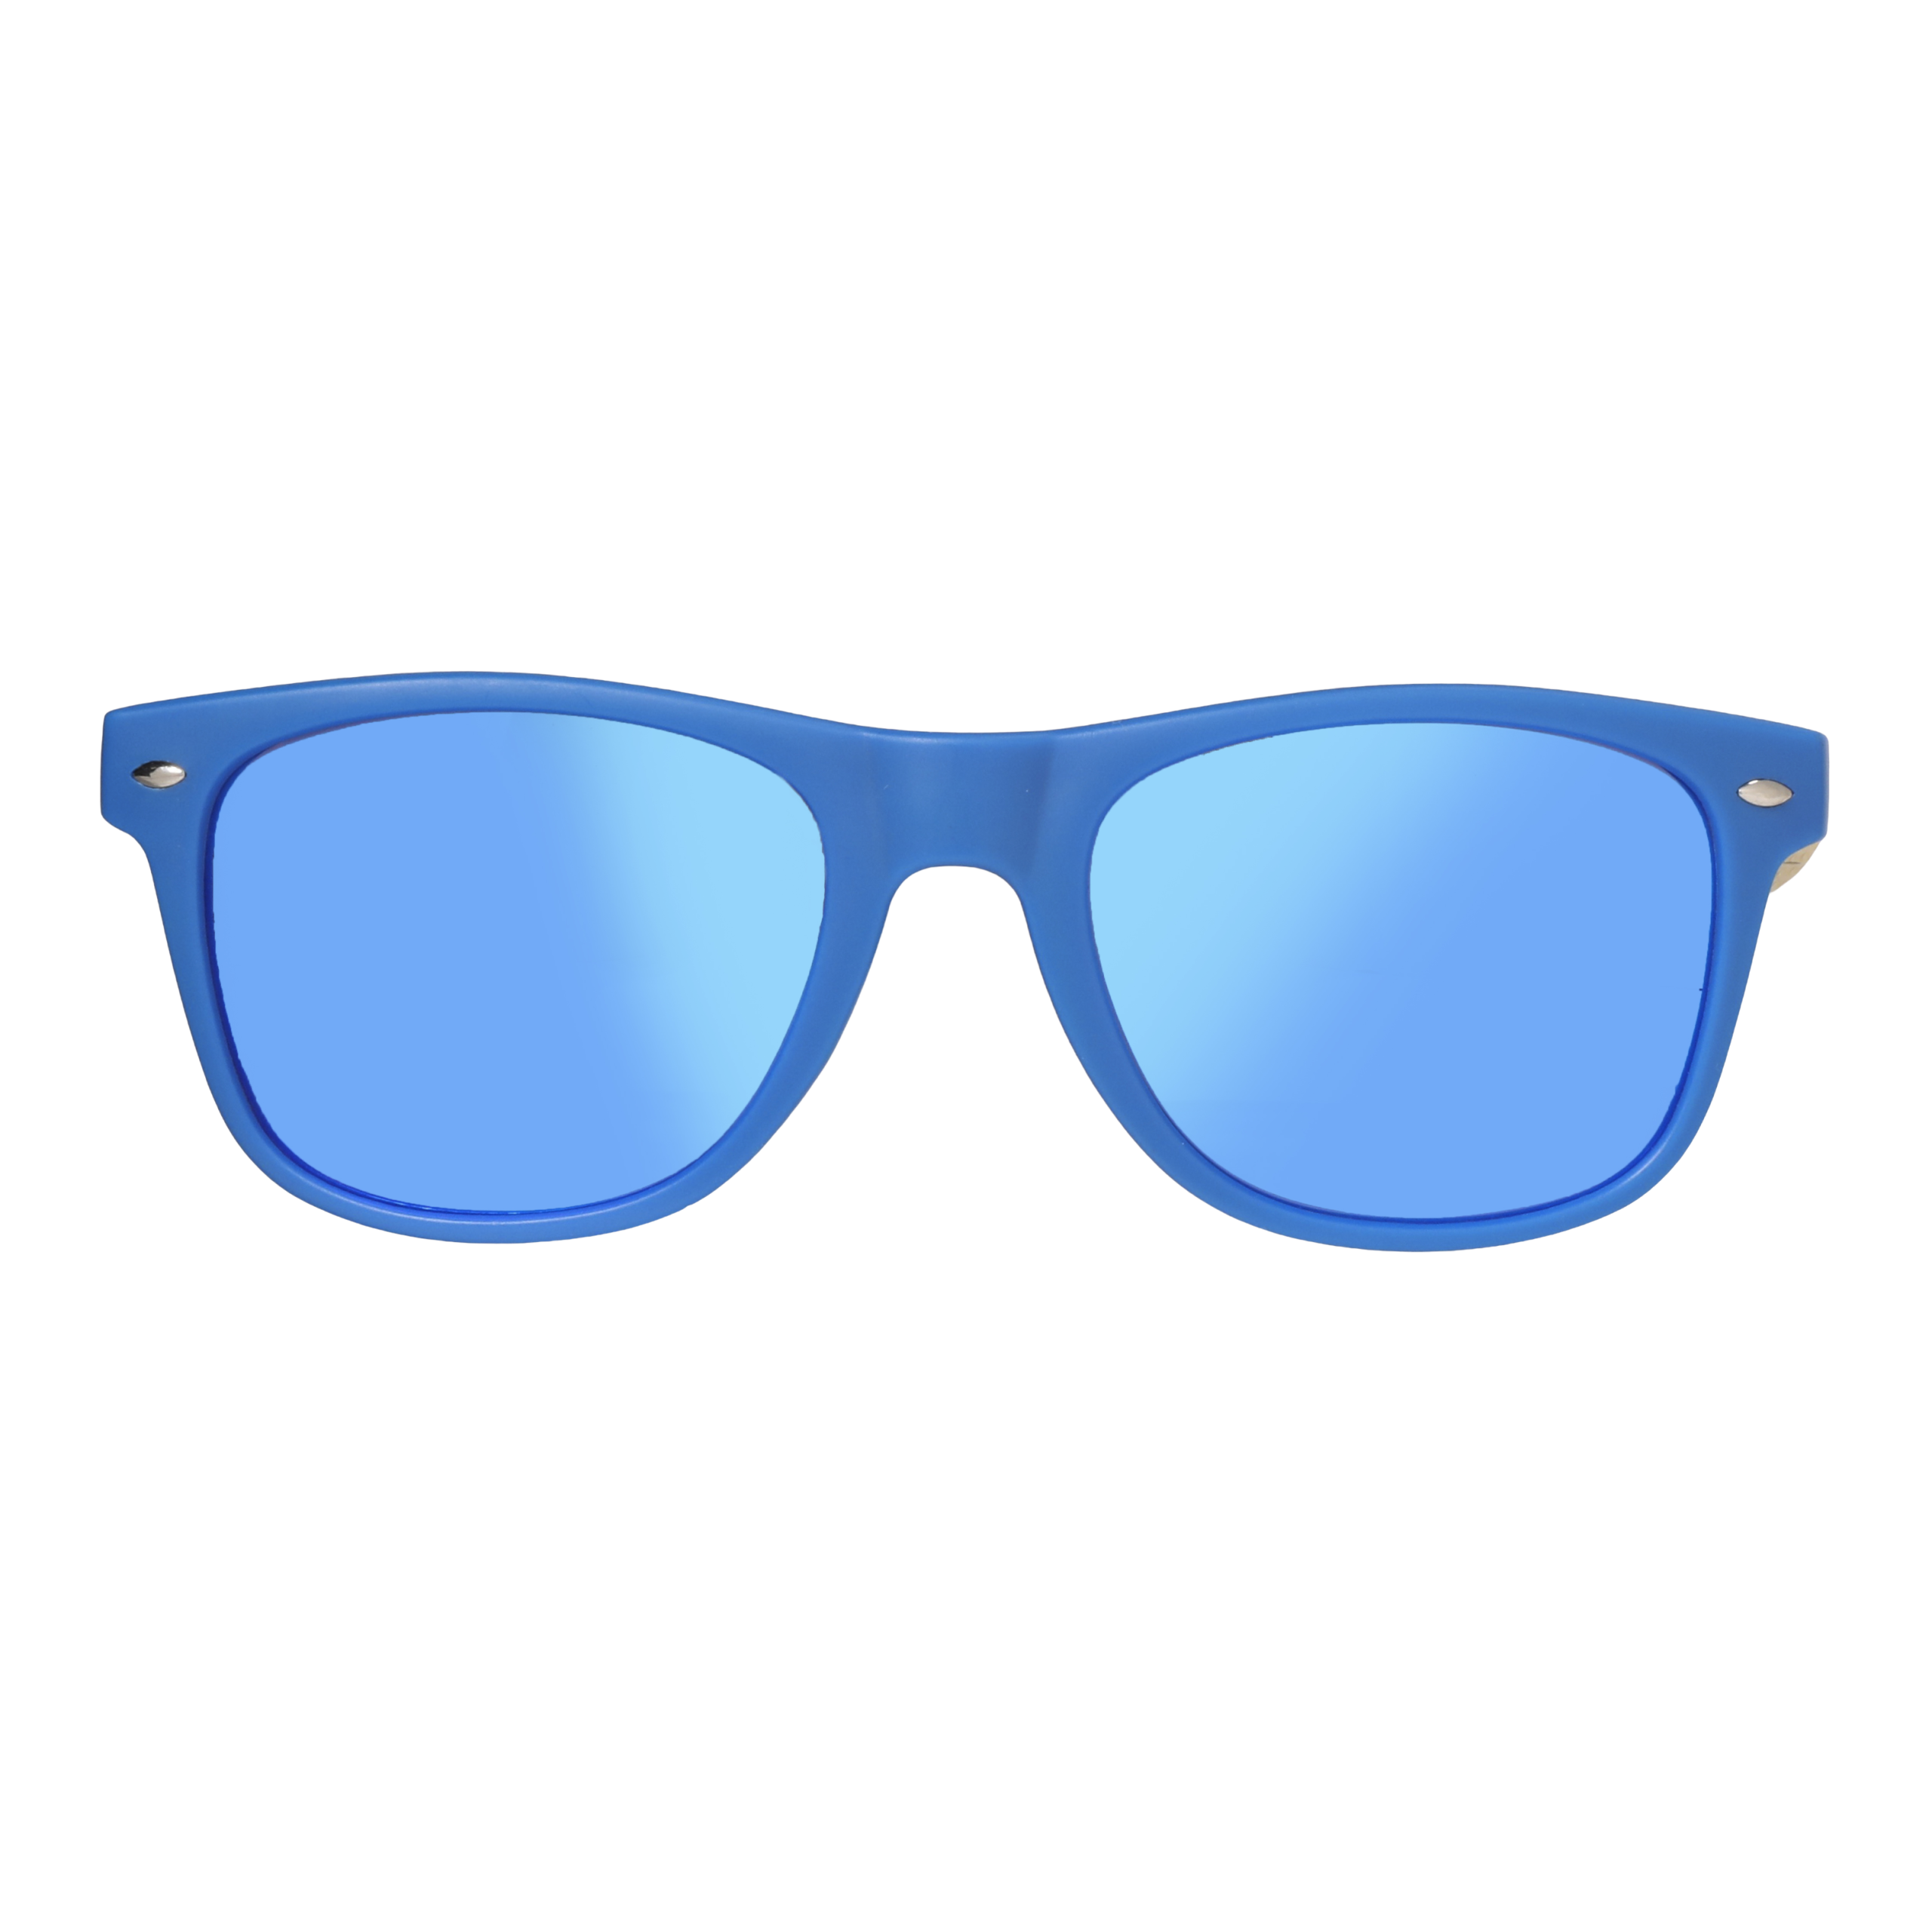 Blue Glass Lens Sunglasses | peacecommission.kdsg.gov.ng